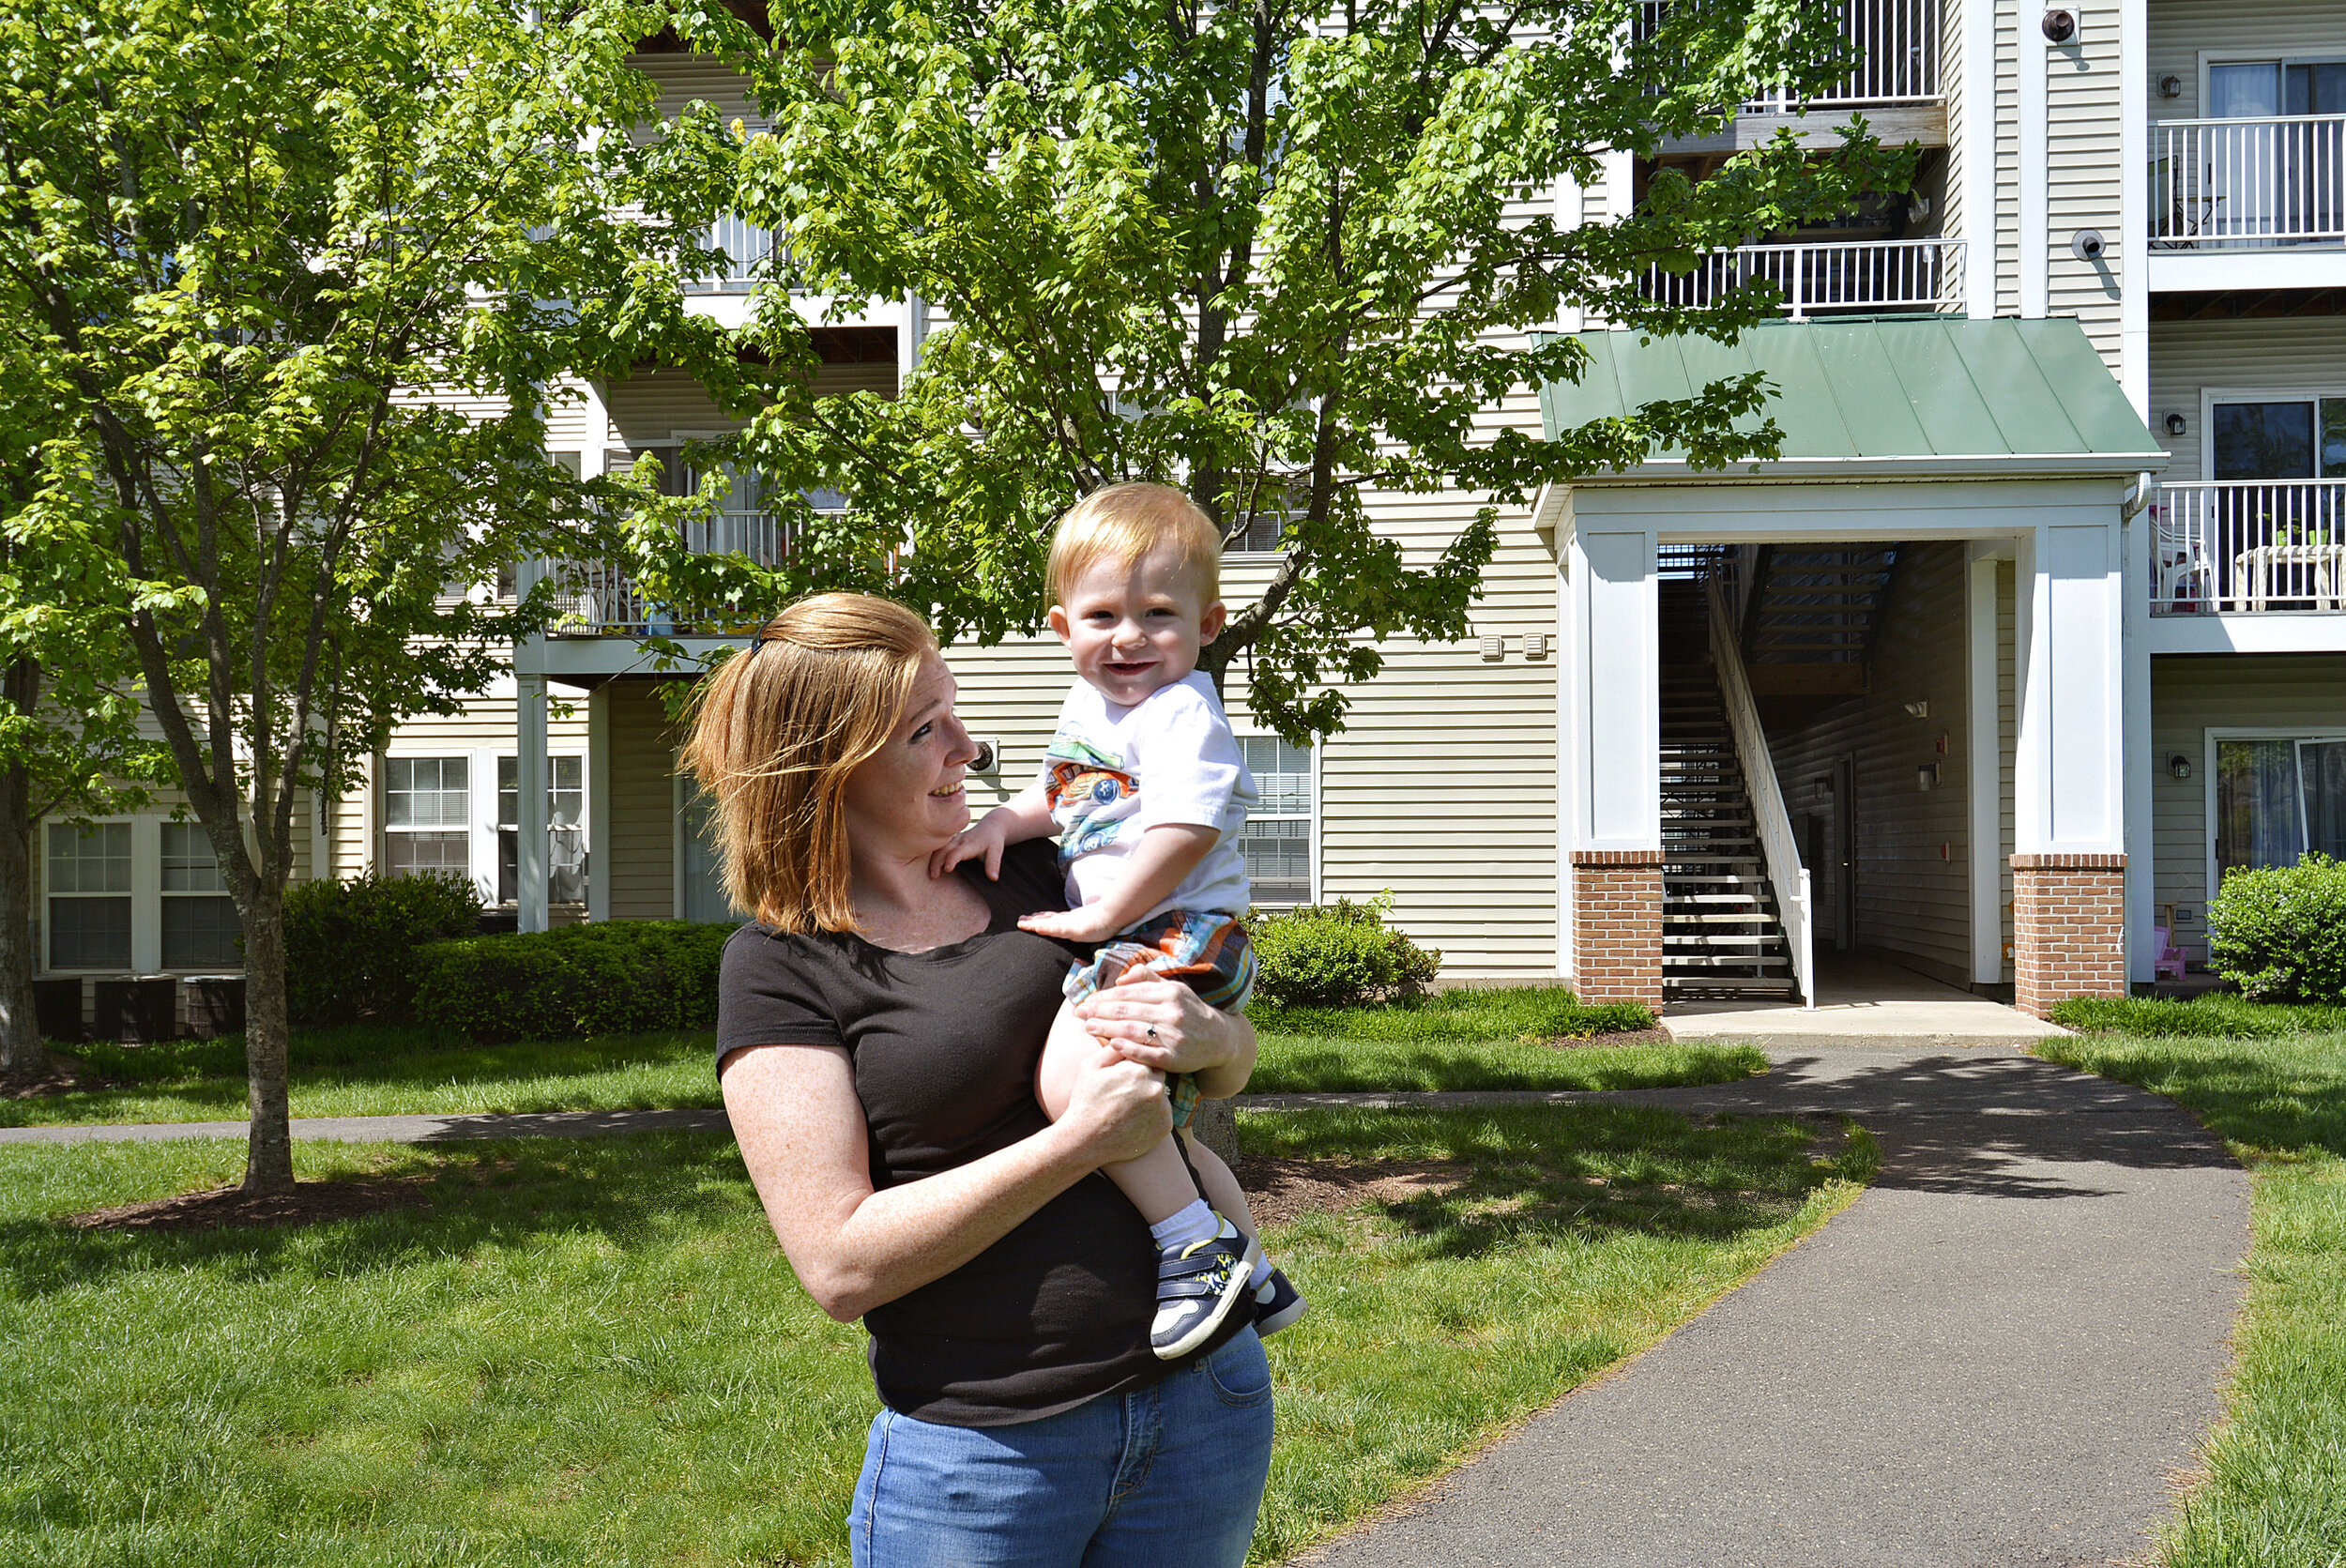  Family-friendly affordable housing community in Ashburn, VA.  